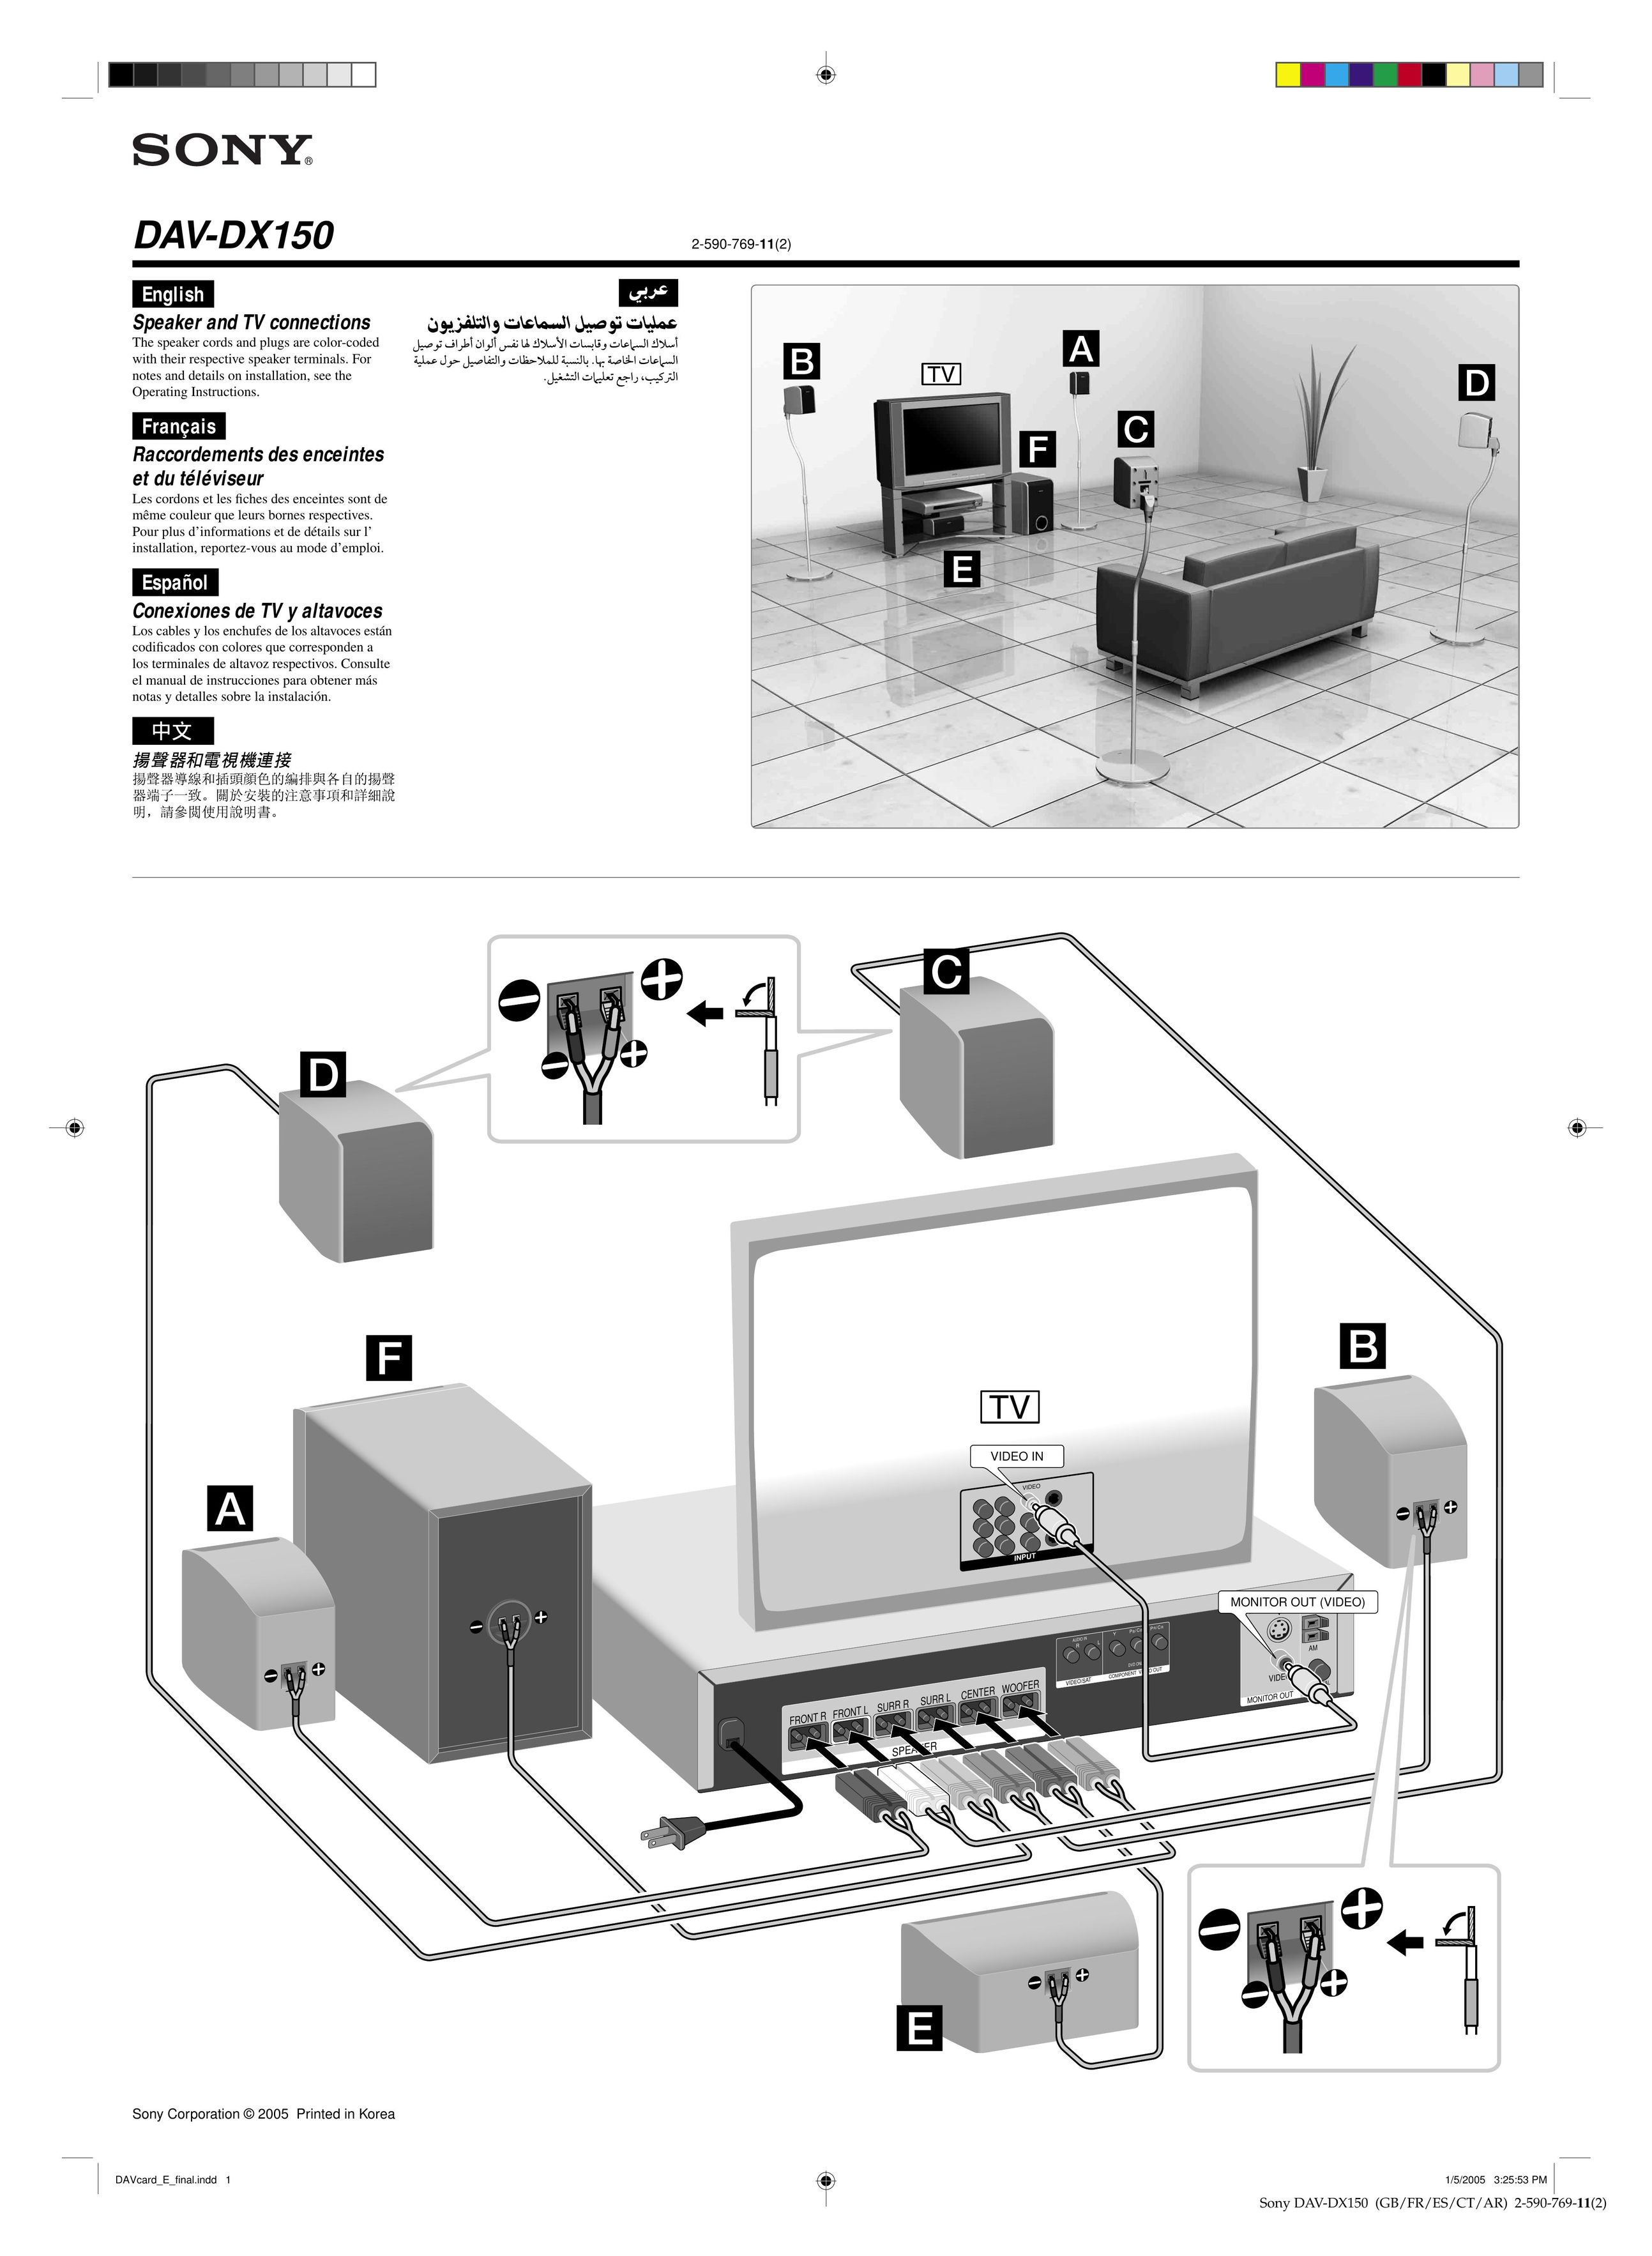 Sony DAV-DX150 Home Theater Server User Manual